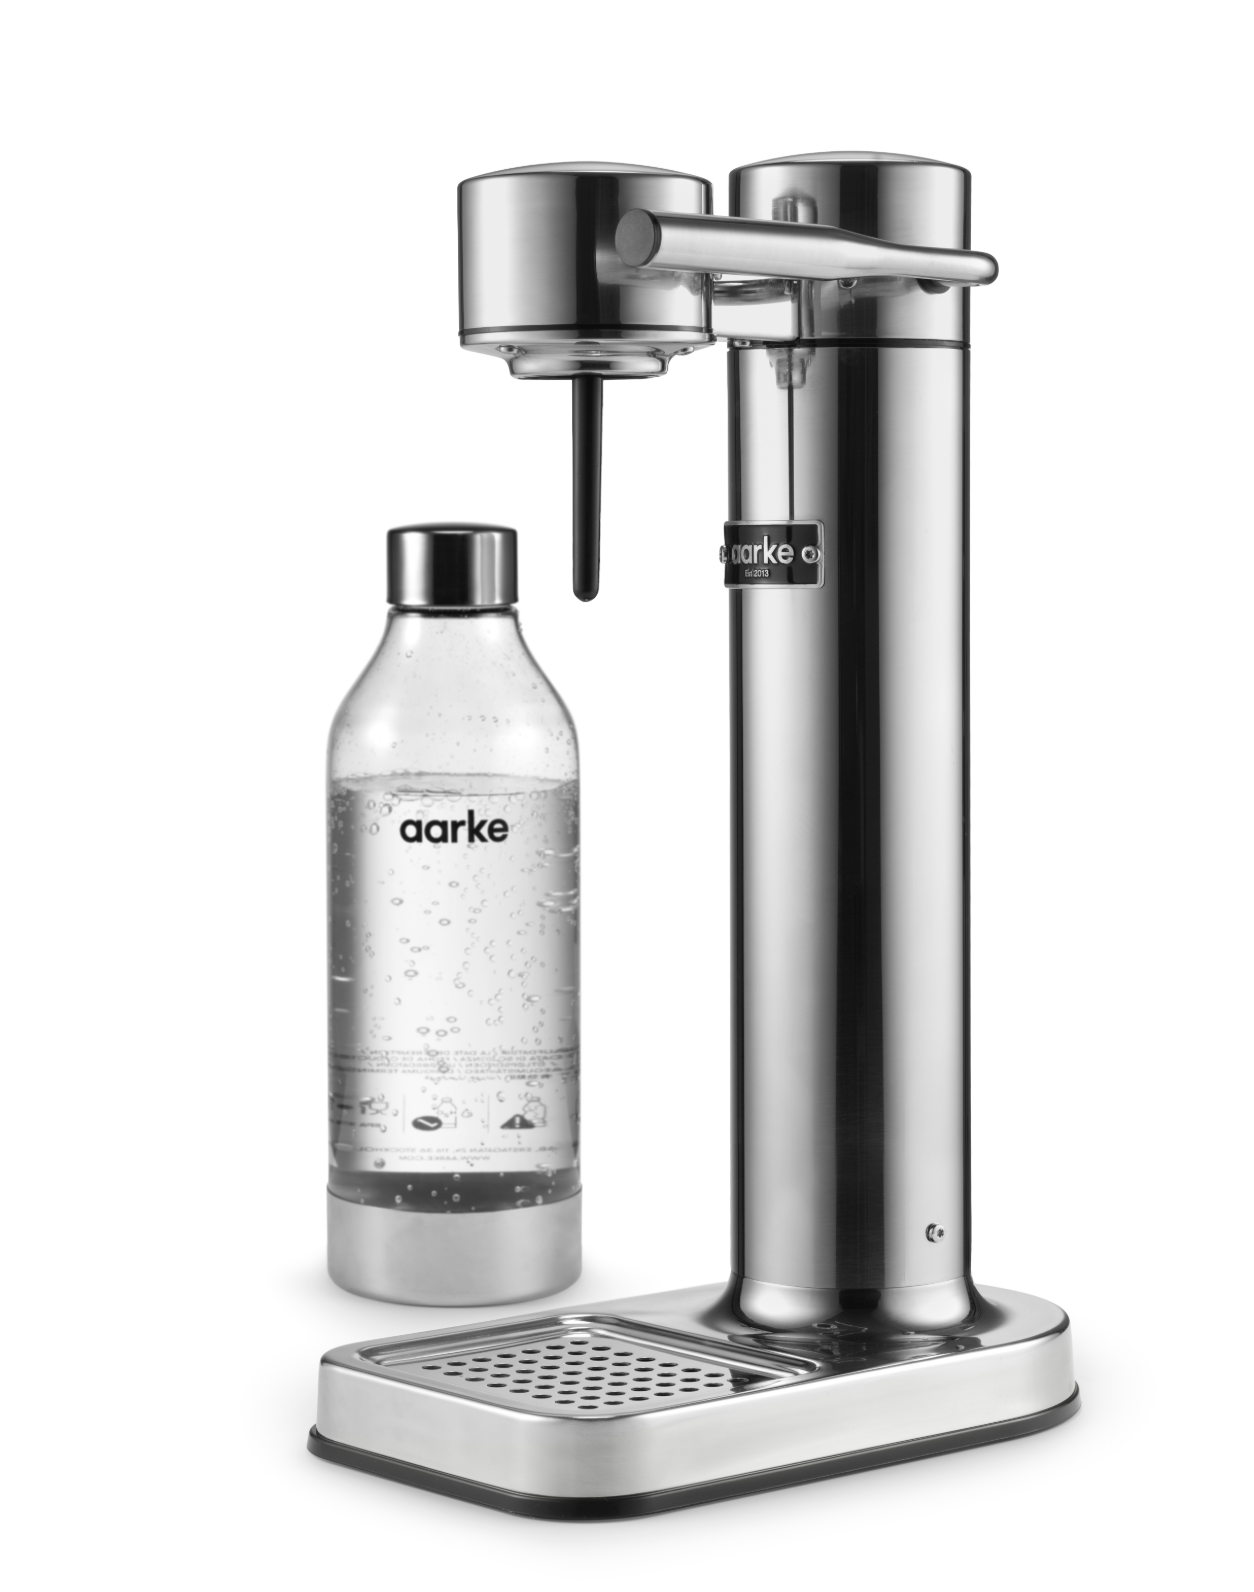 SodaStream Aarke Carbonator III + Double Gas Cylinder Bundle – Steel